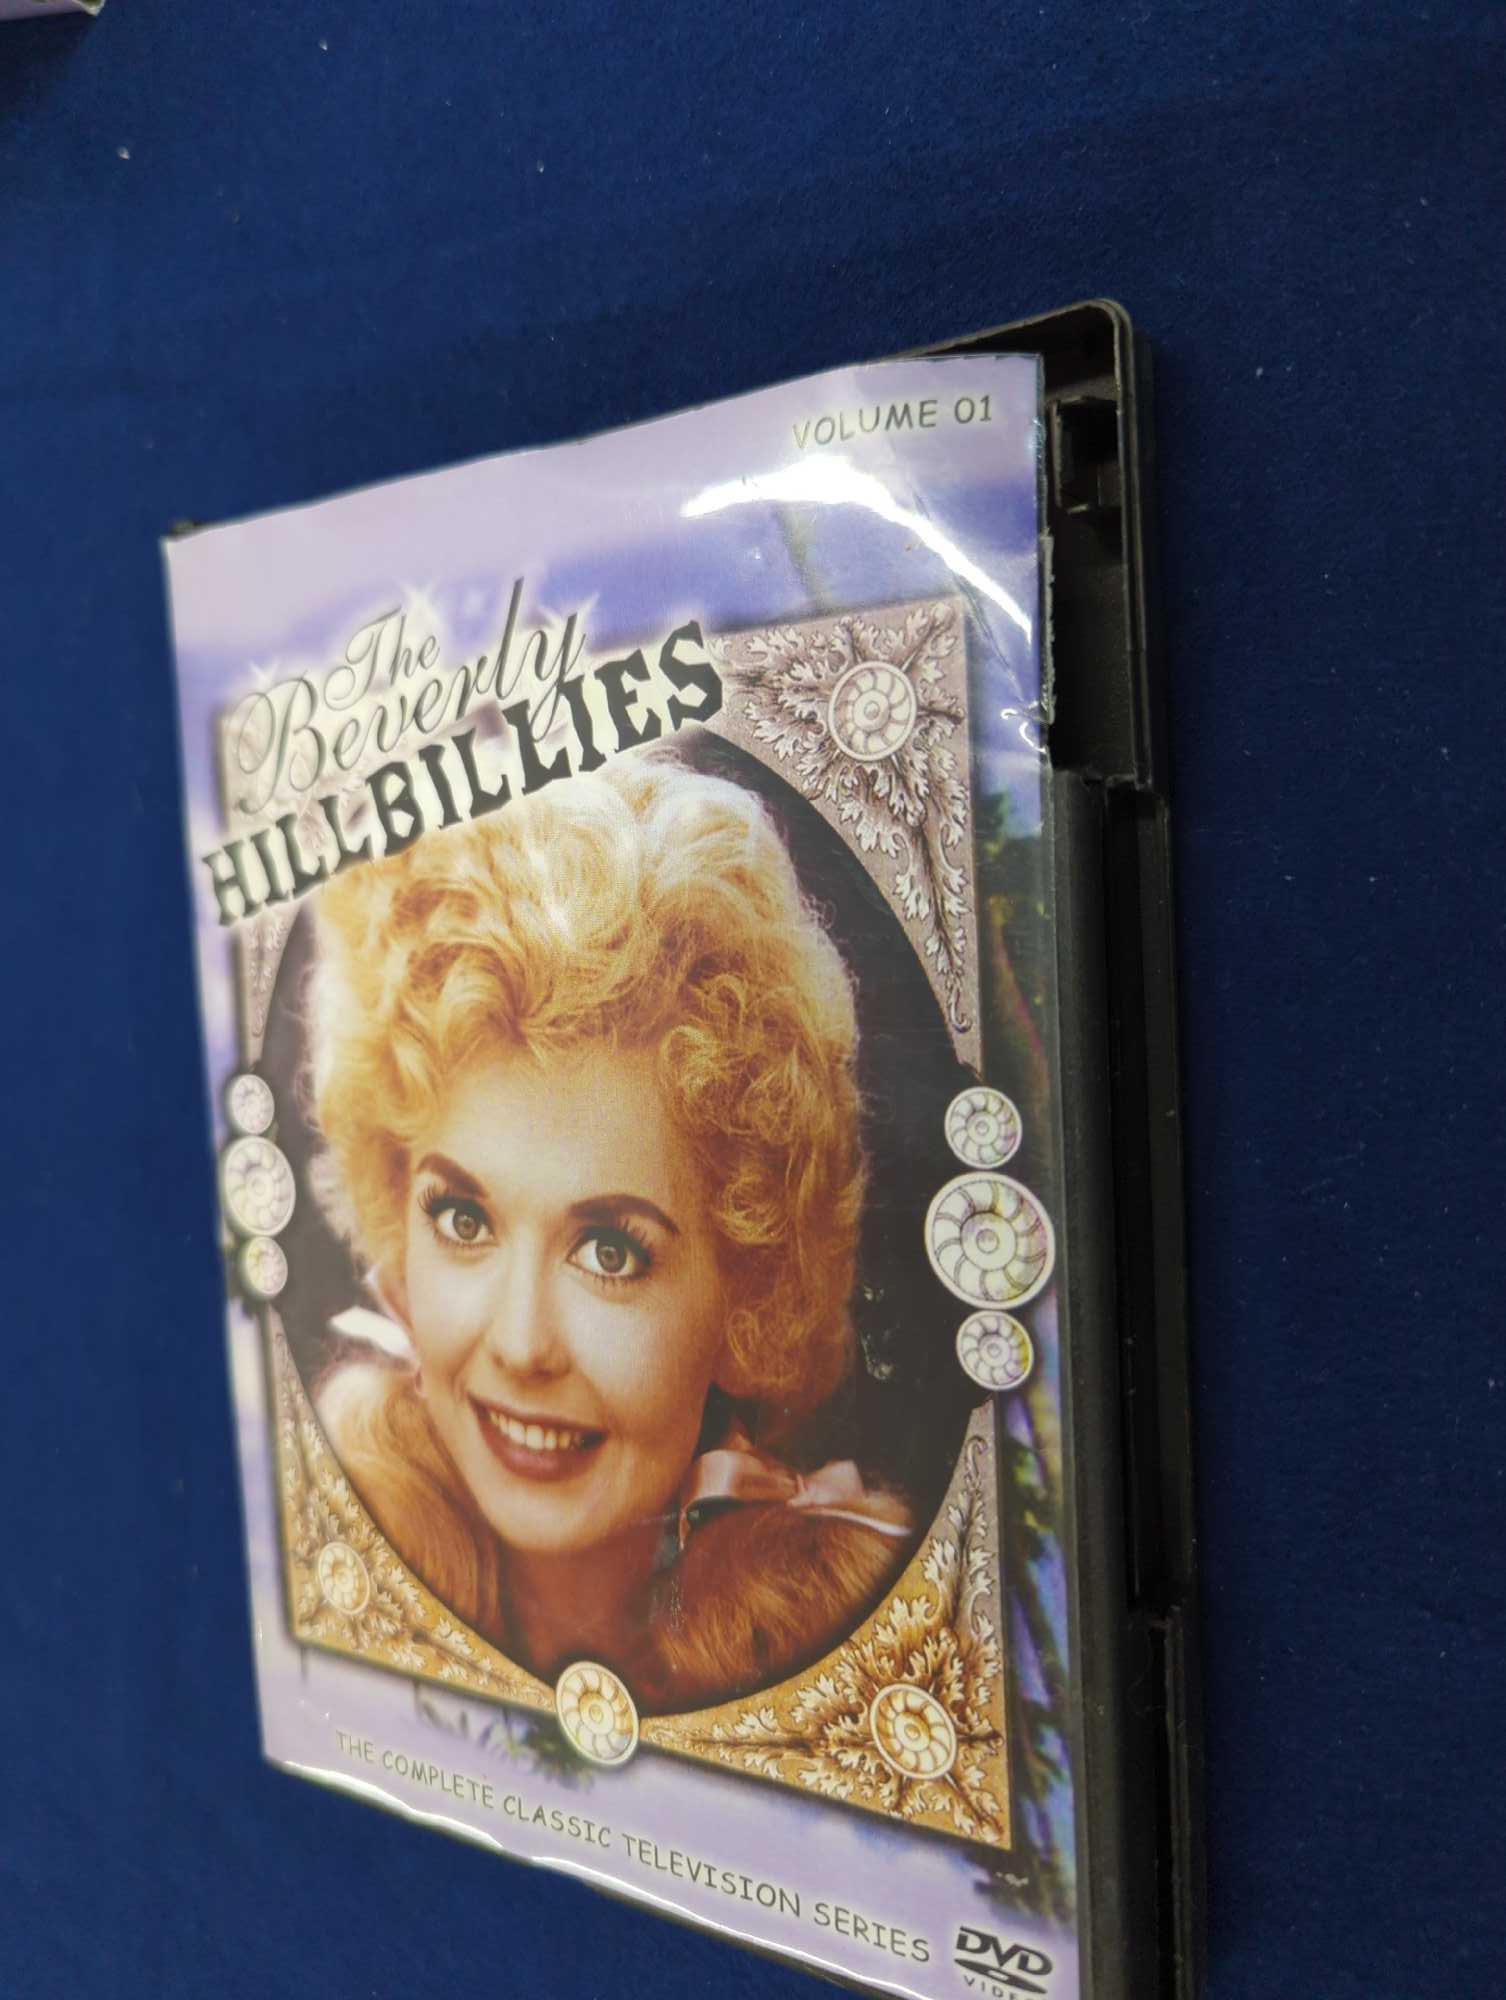 THE BEVERLY HILLBILLIES VOLUME 1THROUGH 8 DVDS, VOL. 8 MISSING DVD DISCS 45-48